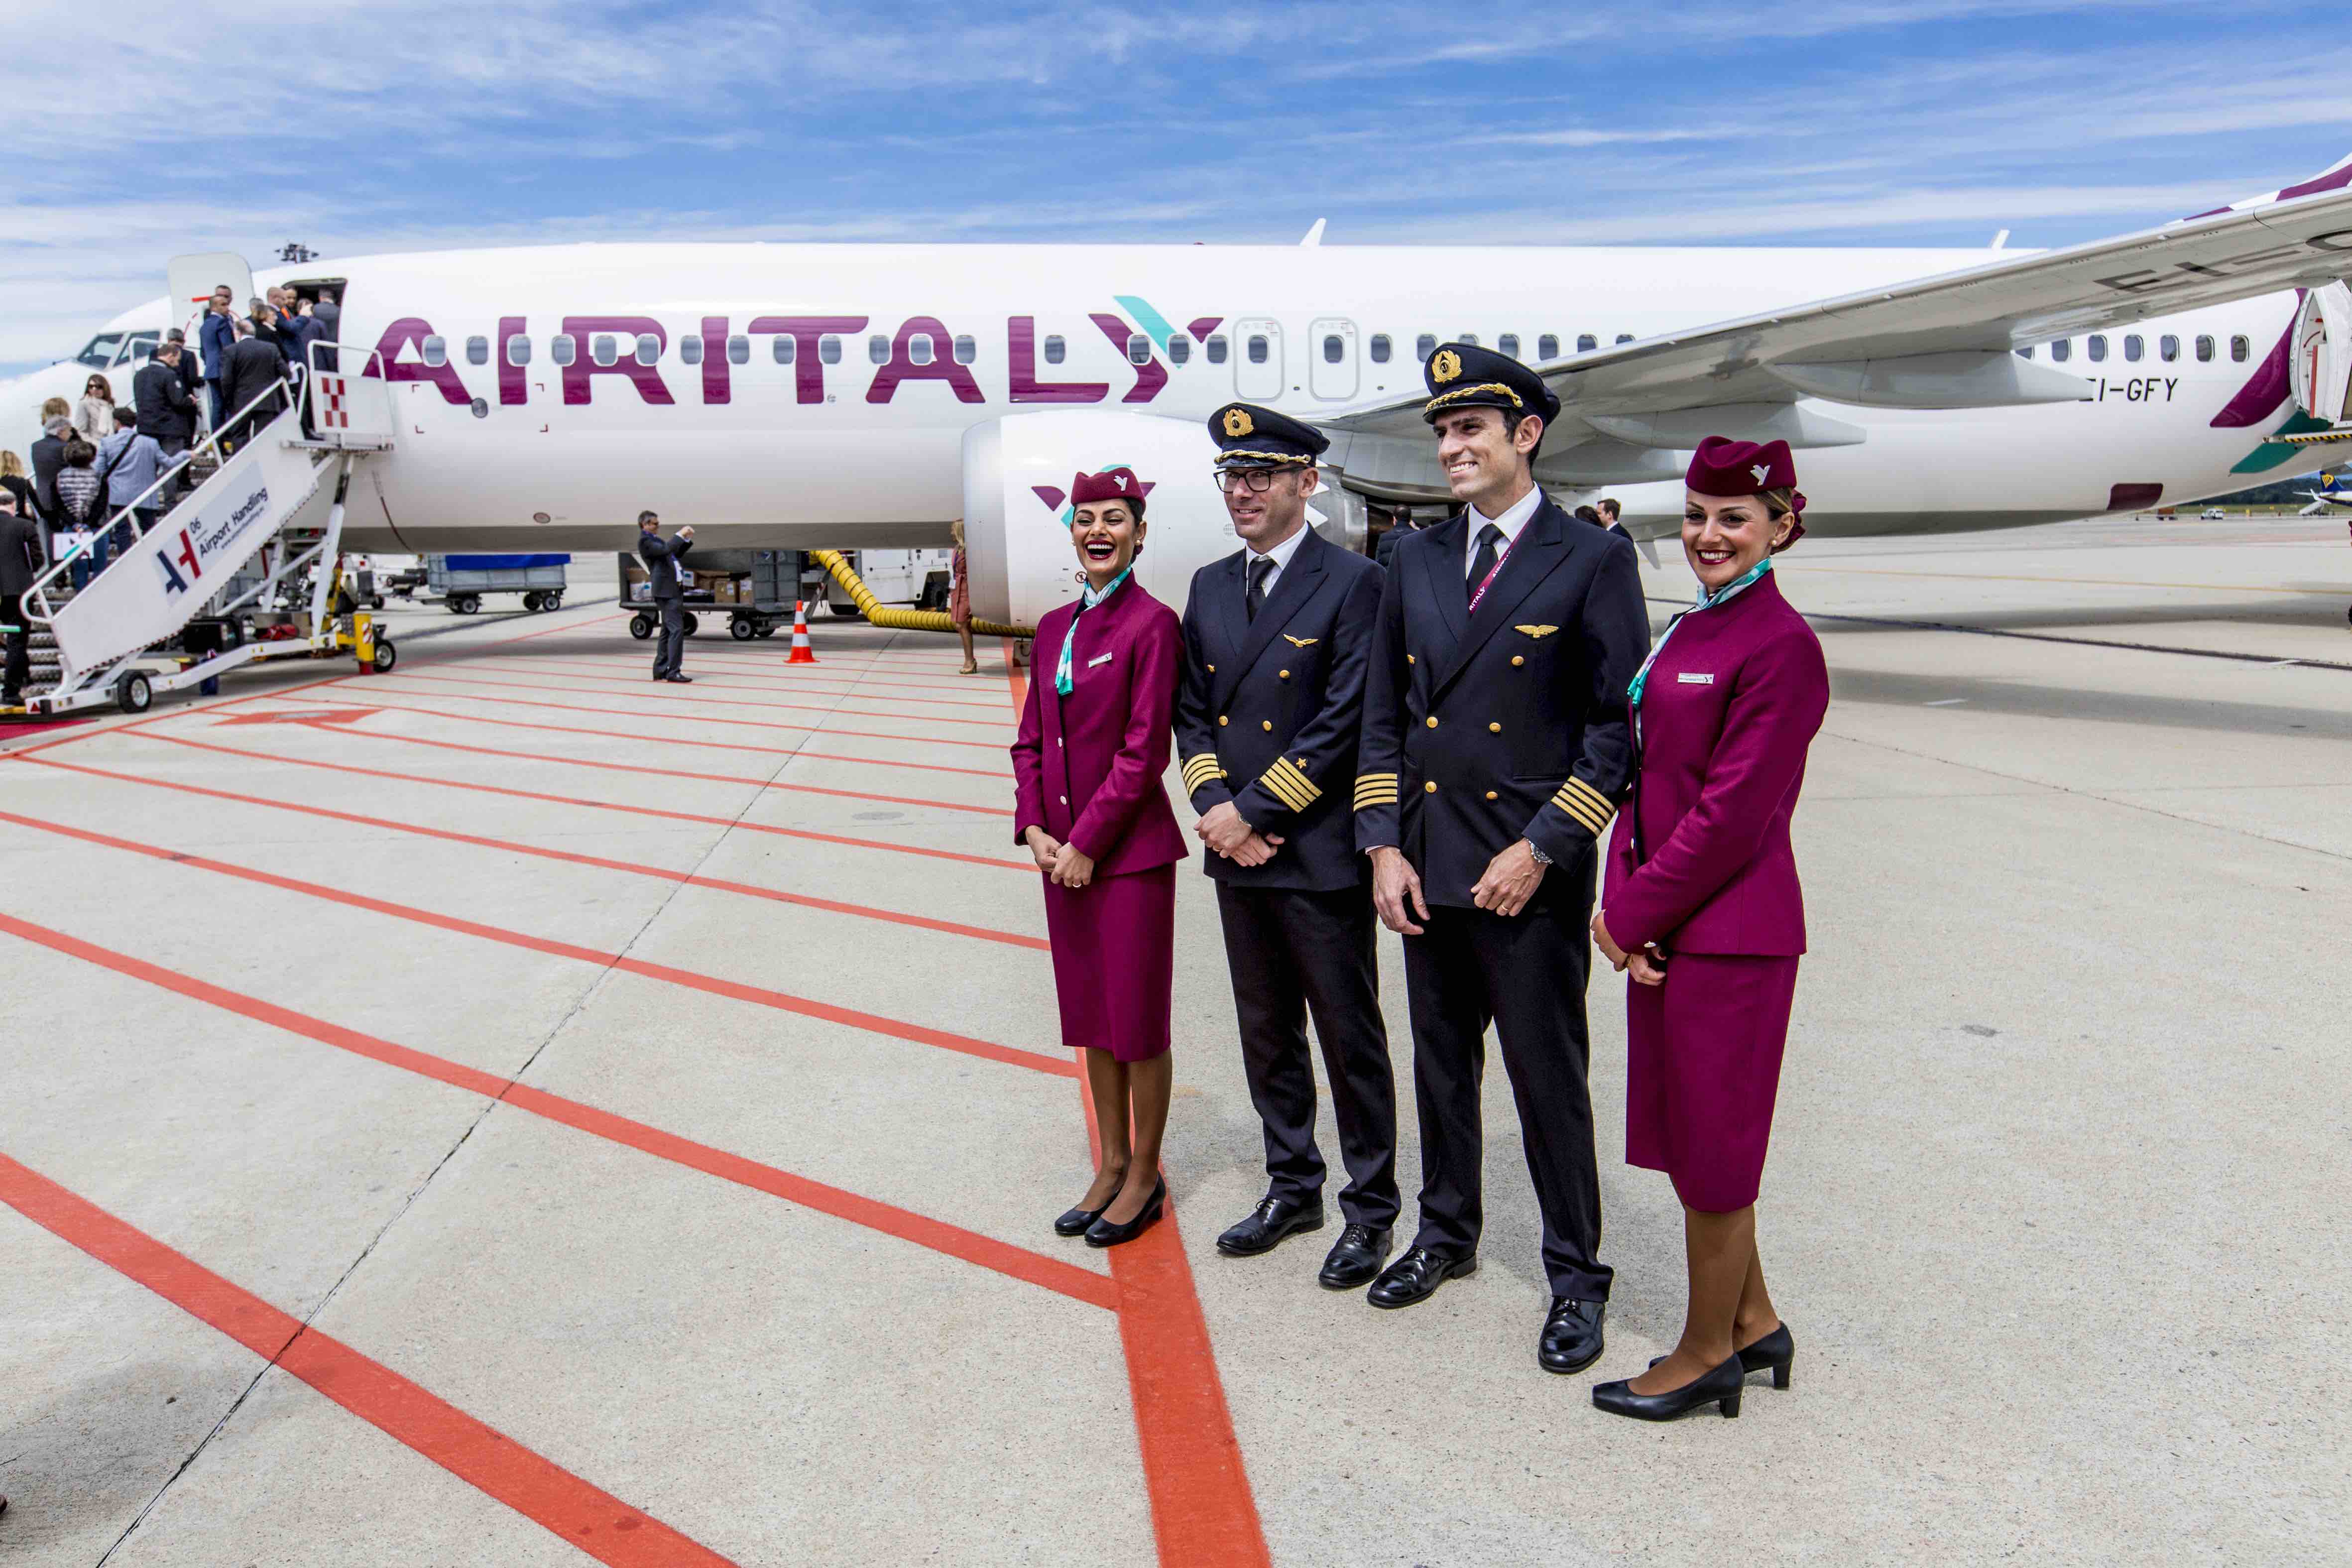 Qatar Airways Air Italy Attack